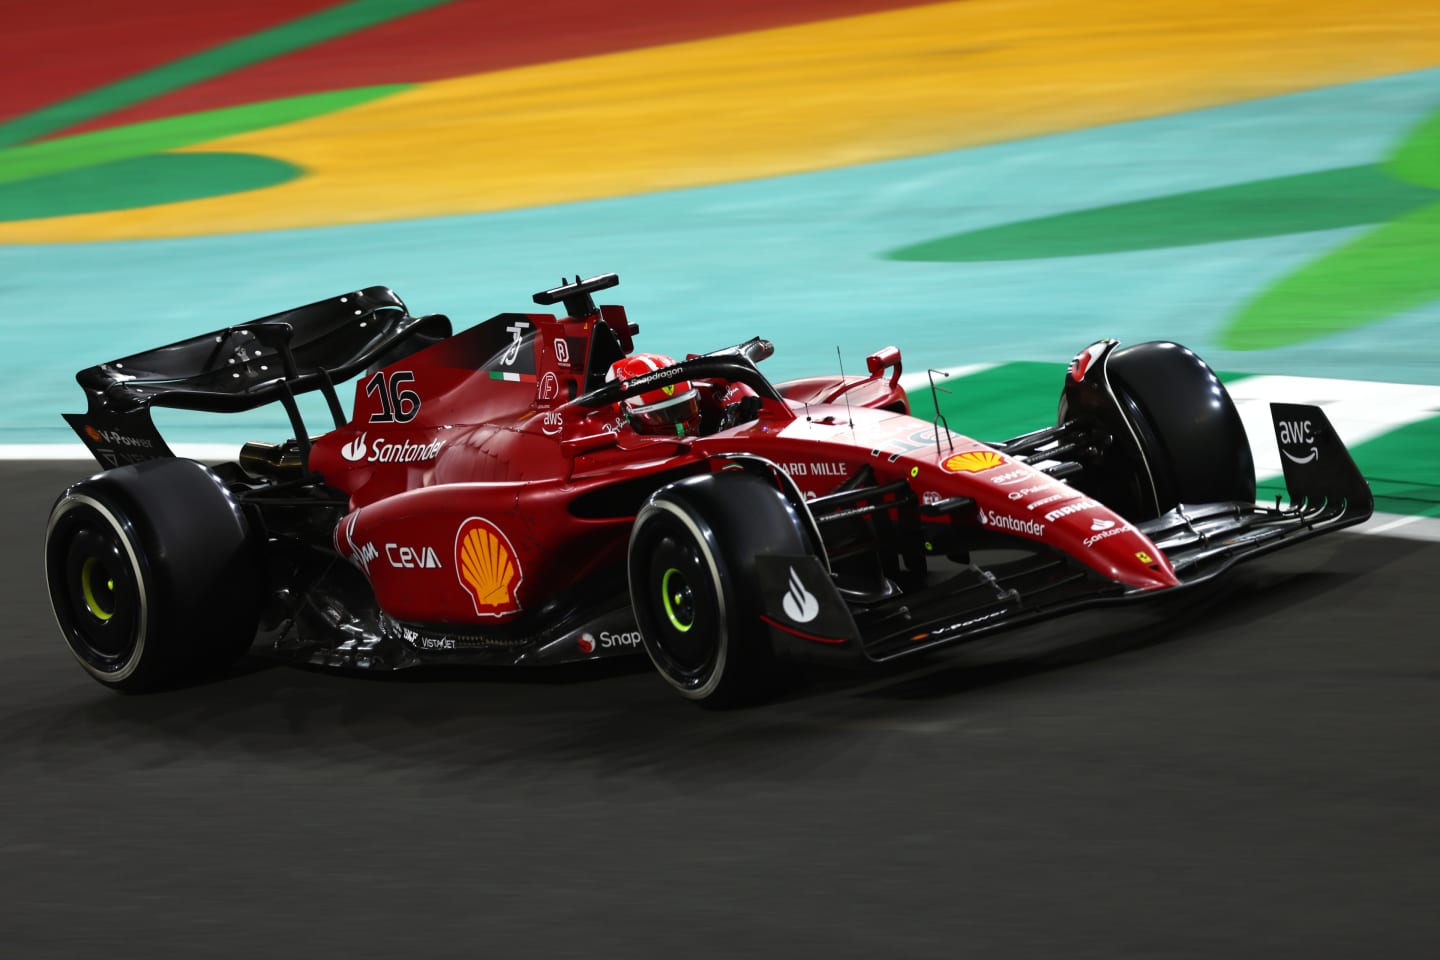 JEDDAH, SAUDI ARABIA - MARCH 27: Charles Leclerc of Monaco driving (16) the Ferrari F1-75 on track